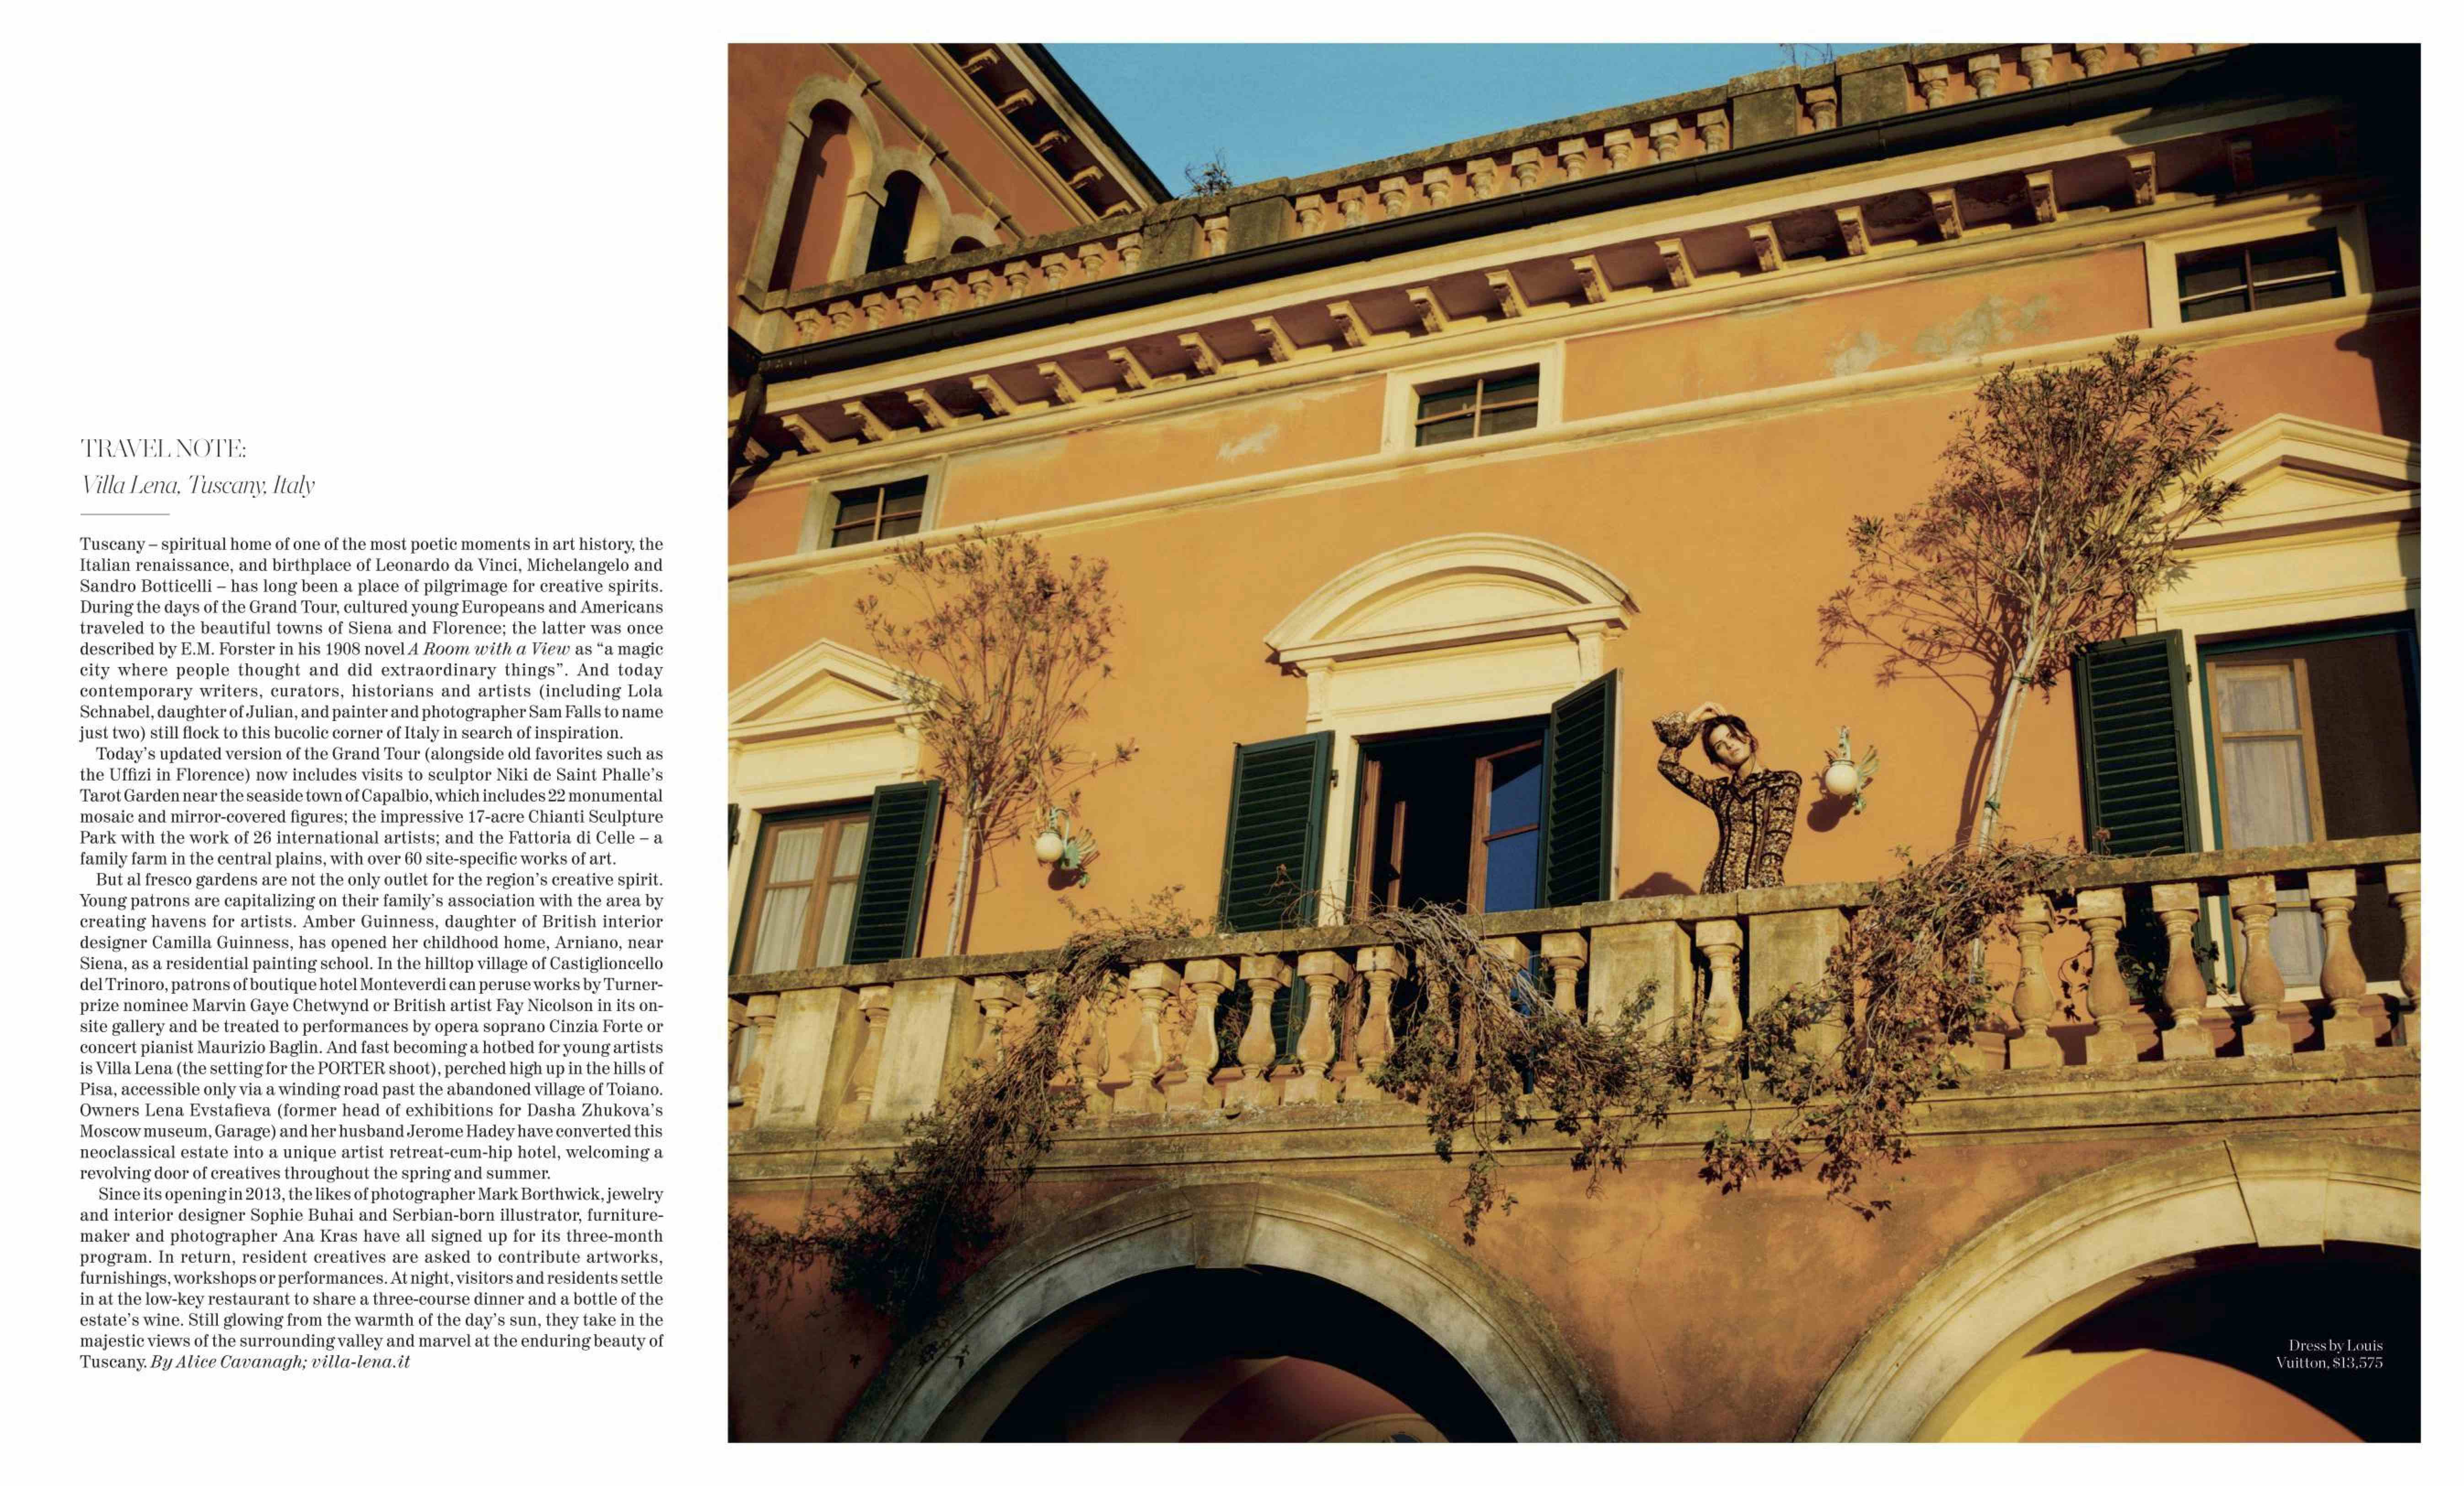 PORTER MAGAZINE - 2015
Photographer: Tom Craig
Model: Isabeli Fontana
Stylist: Cathy Kasterine
Location: Villa Lena - Italy